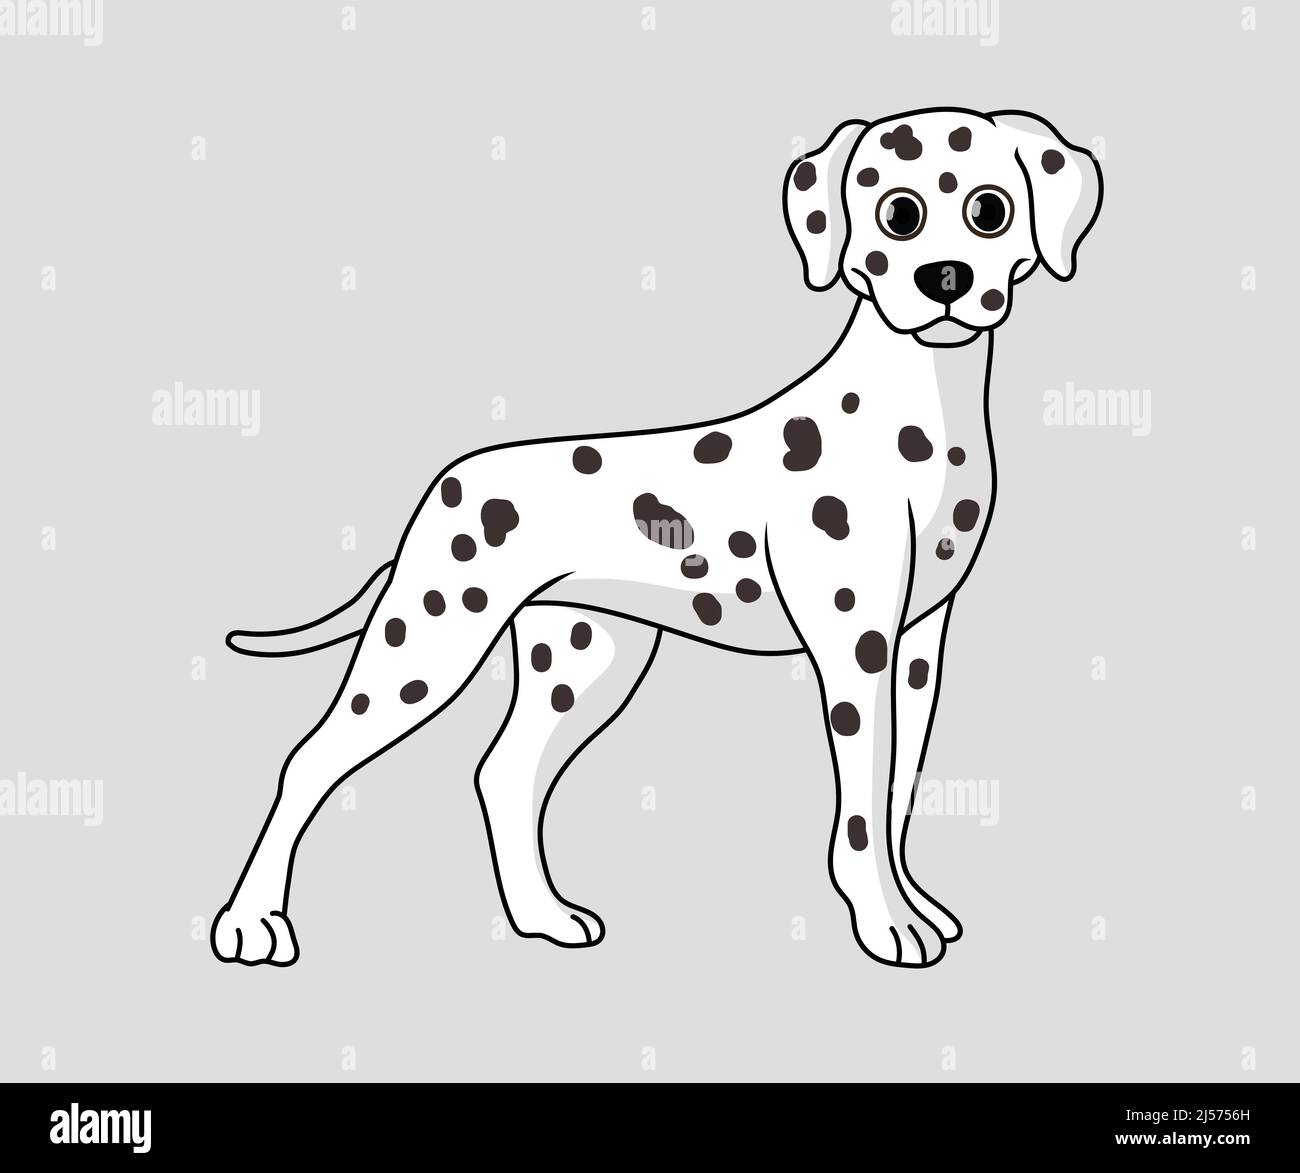 Dalmatian dog illustration vector Stock Vector